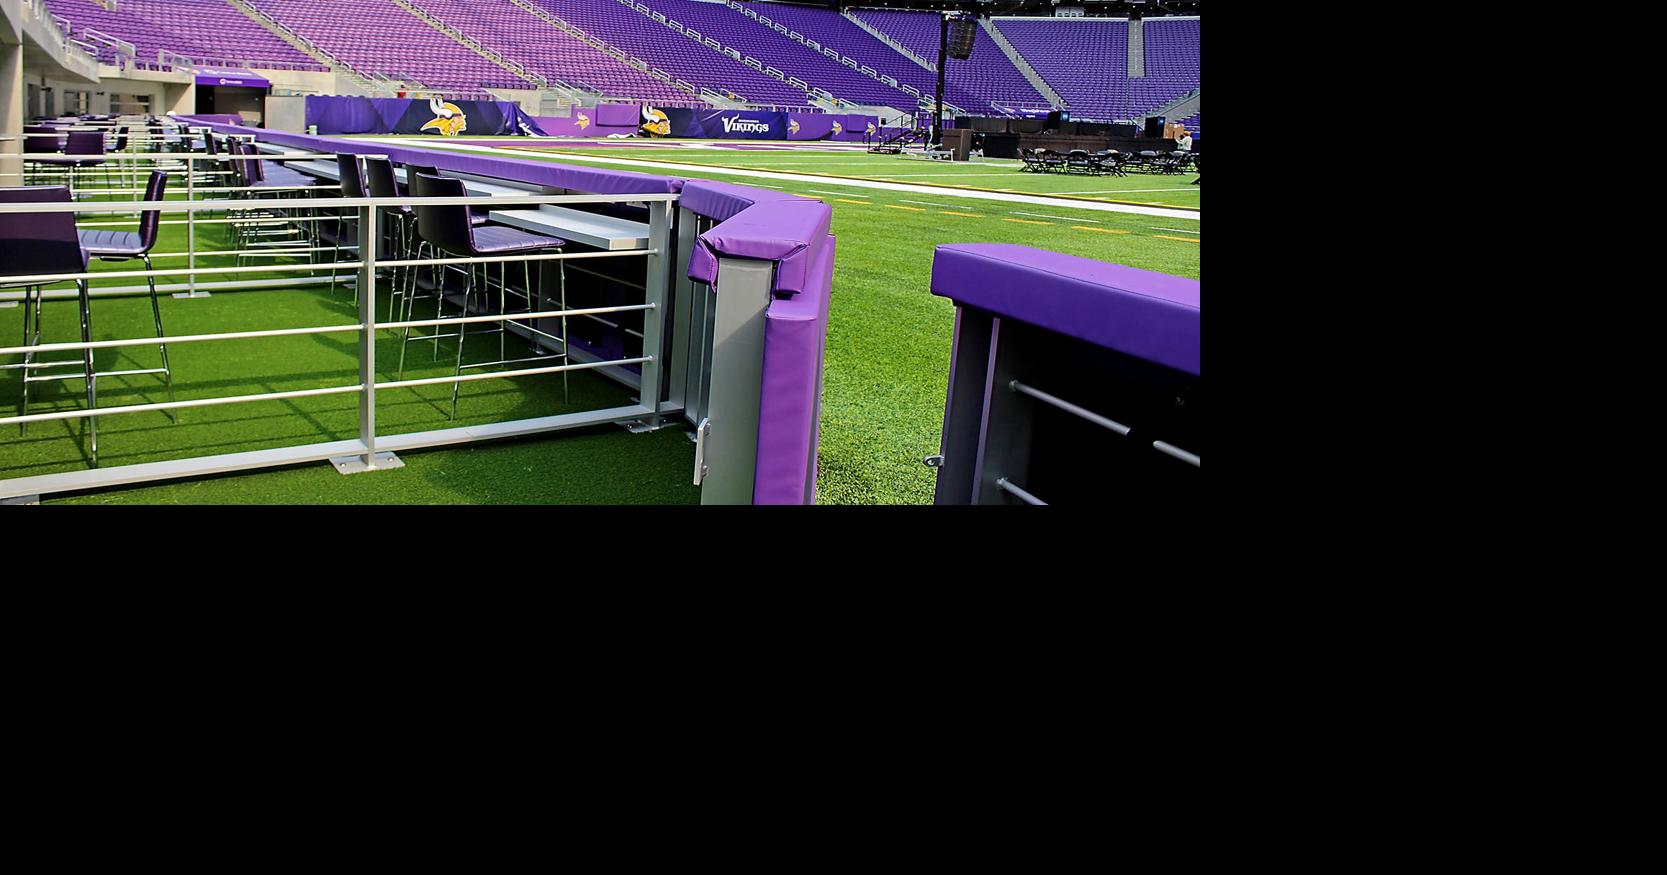 Turf Suite at the New Minnesota Vikings stadium in Minnesota : r/sports